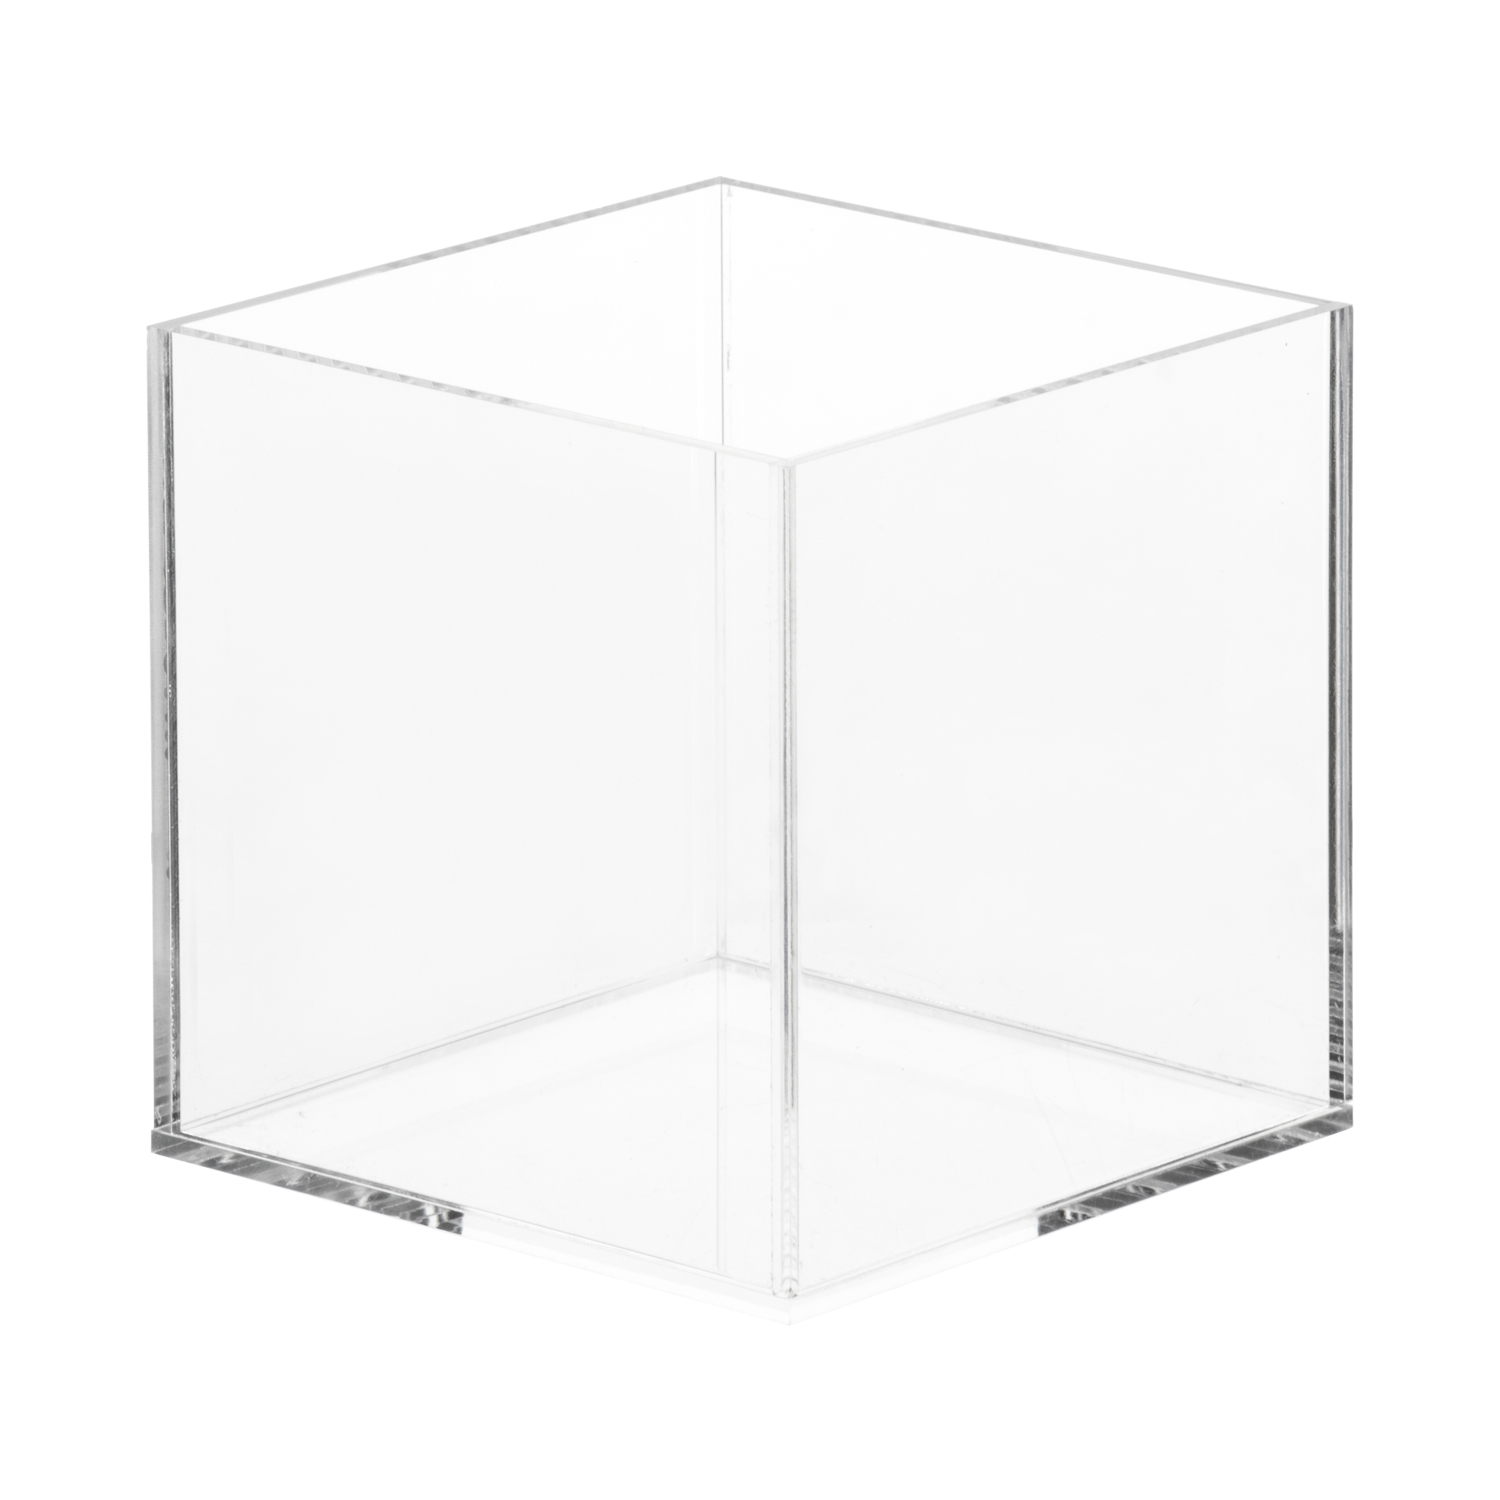 QG 4 pc Ice Cube Square Heavy Base Clear Acrylic Plastic Bathroom Accessory Set 